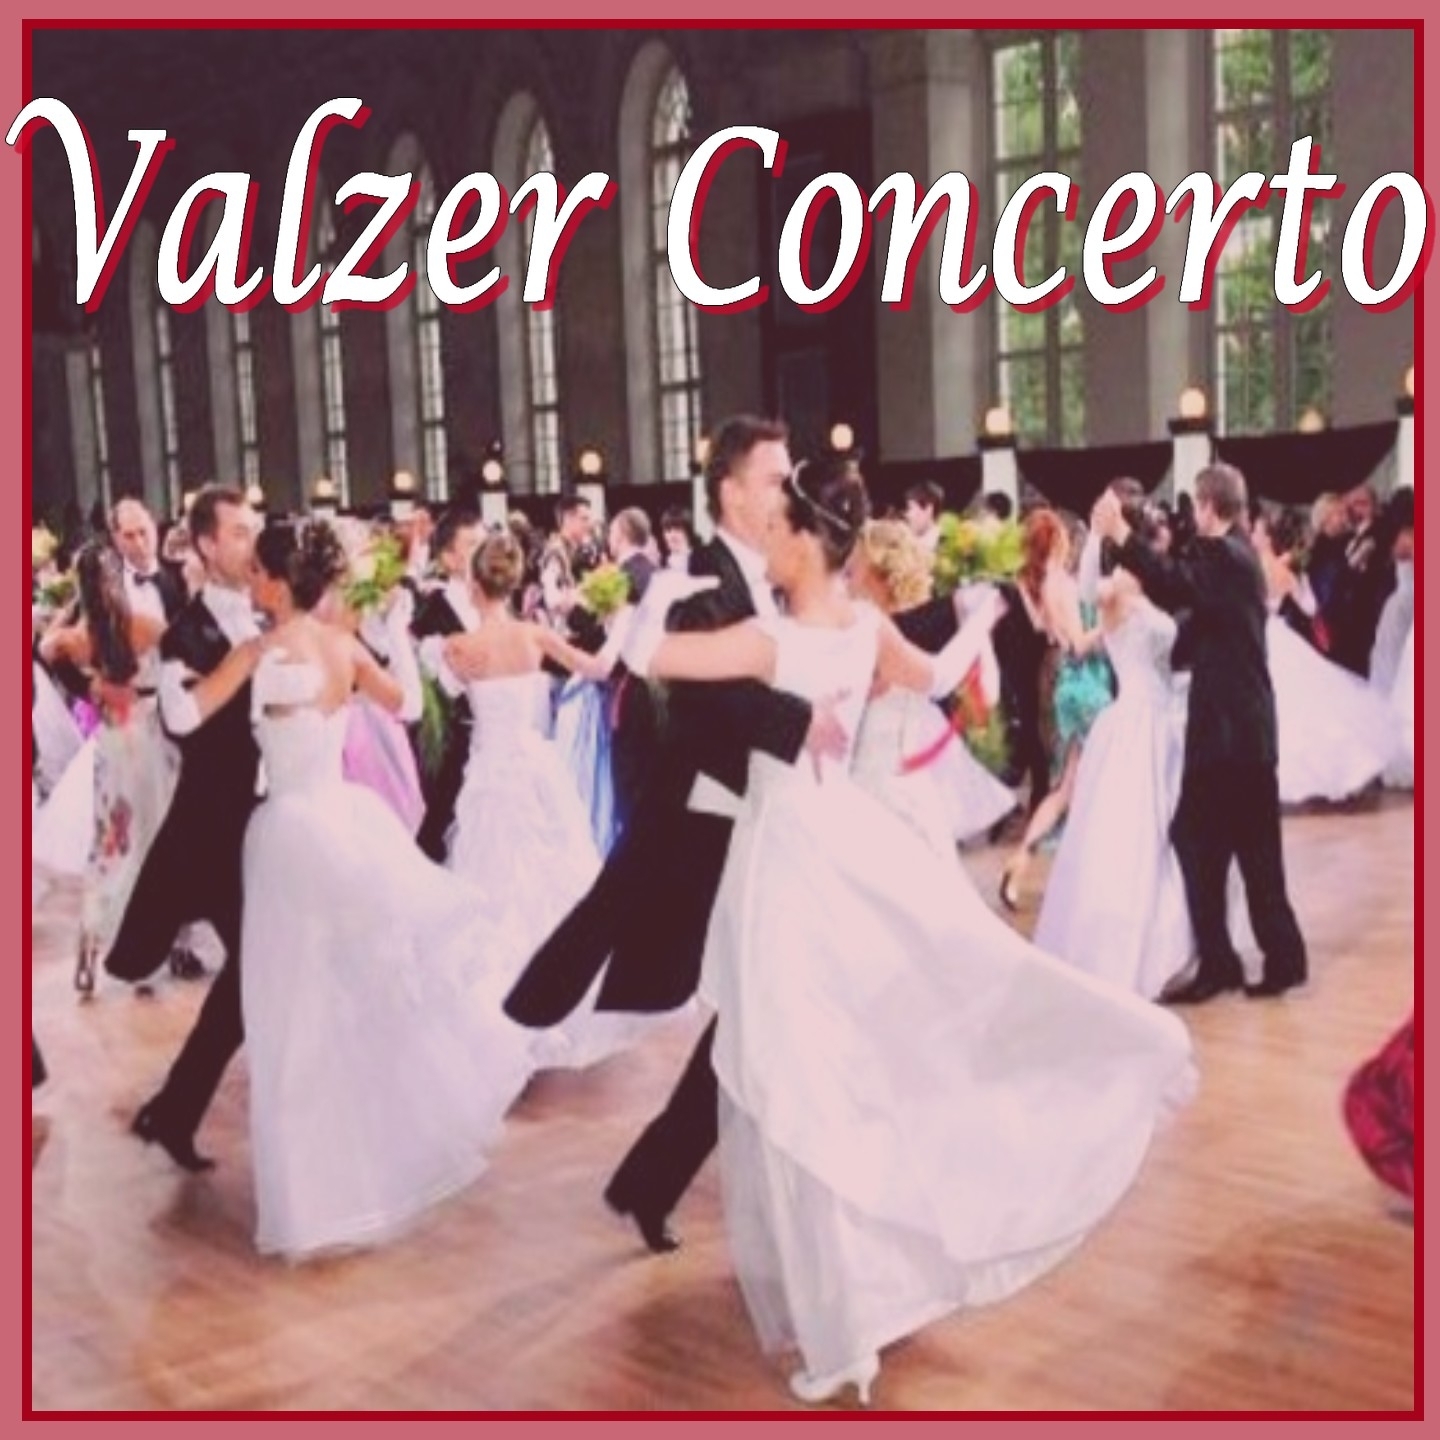 Valzer Concerto